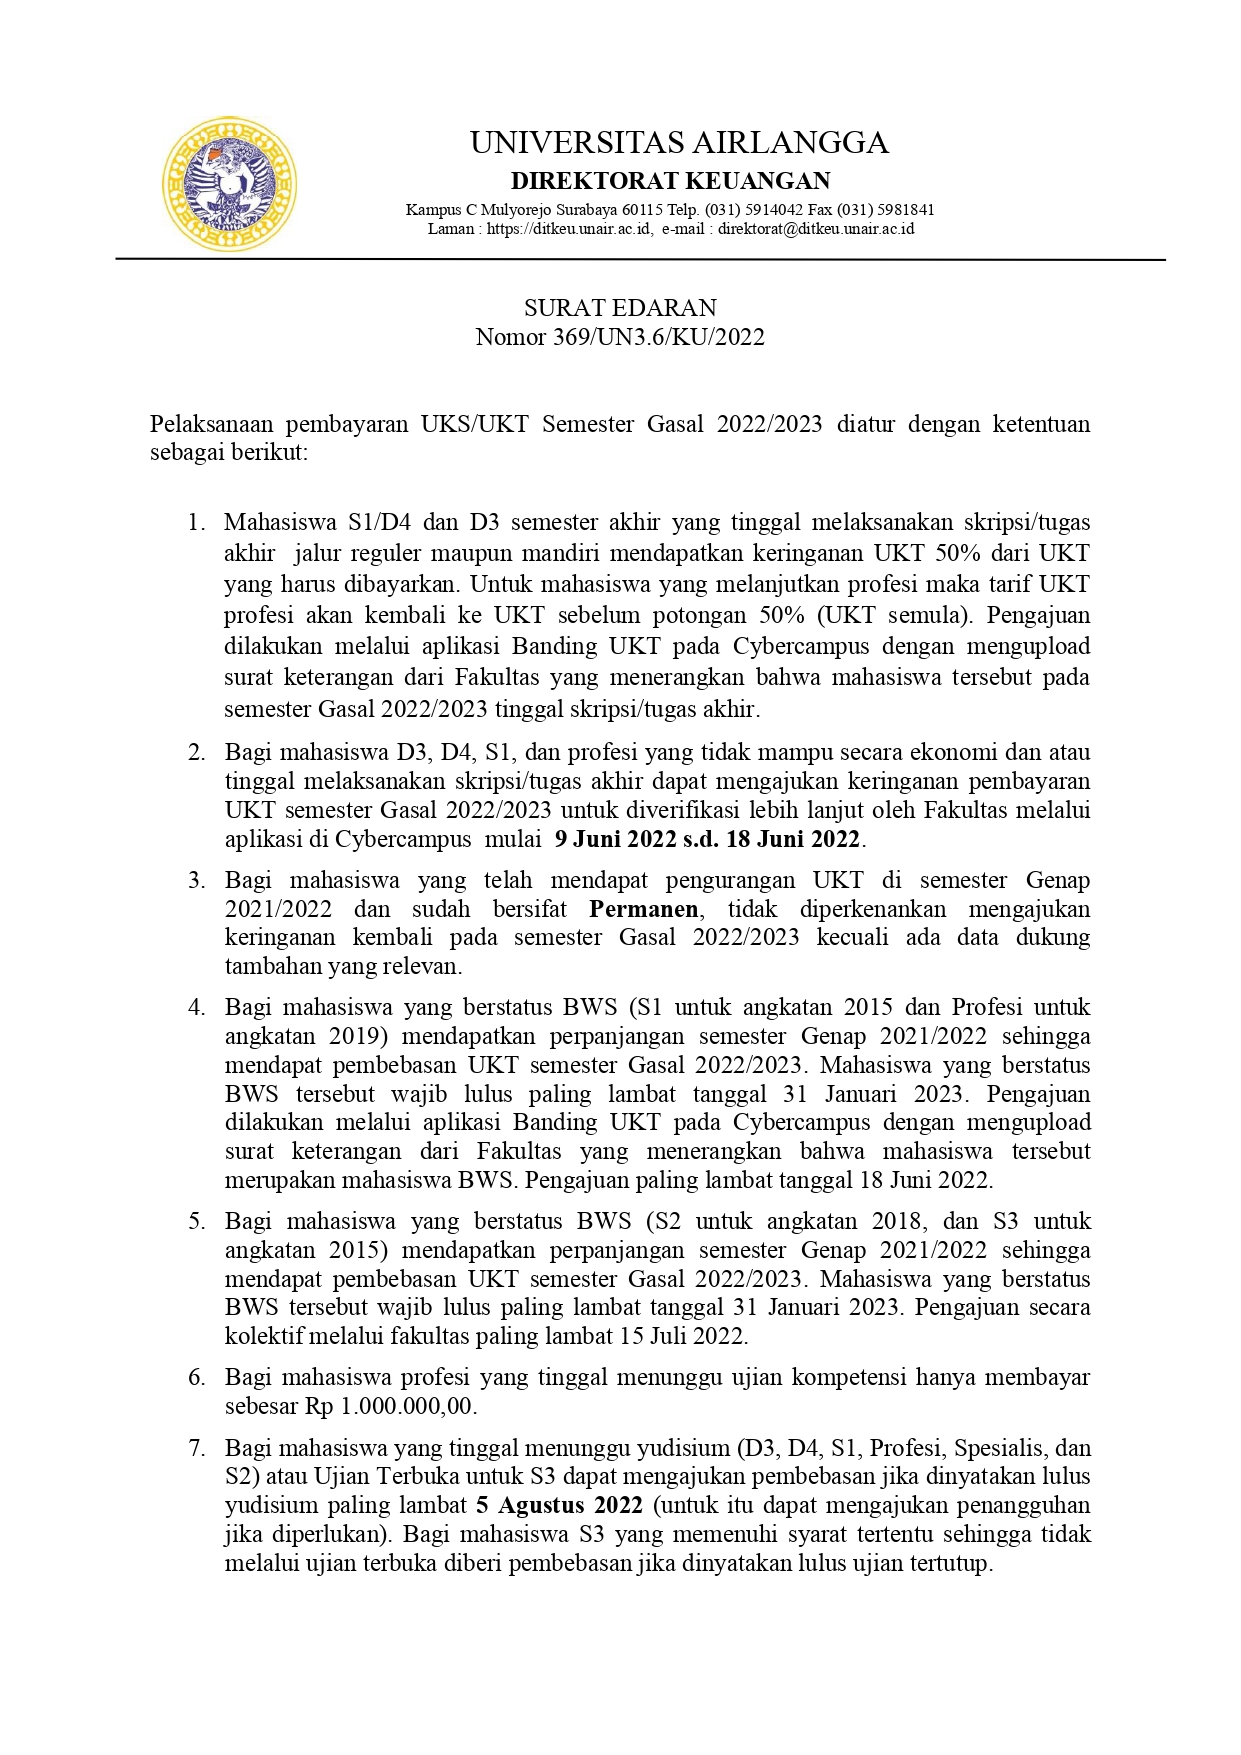 Surat Edaran Pelaksanaan Pembayaran UKS/UKT Semester Gasal 2022/2023 Universitas Airlangga